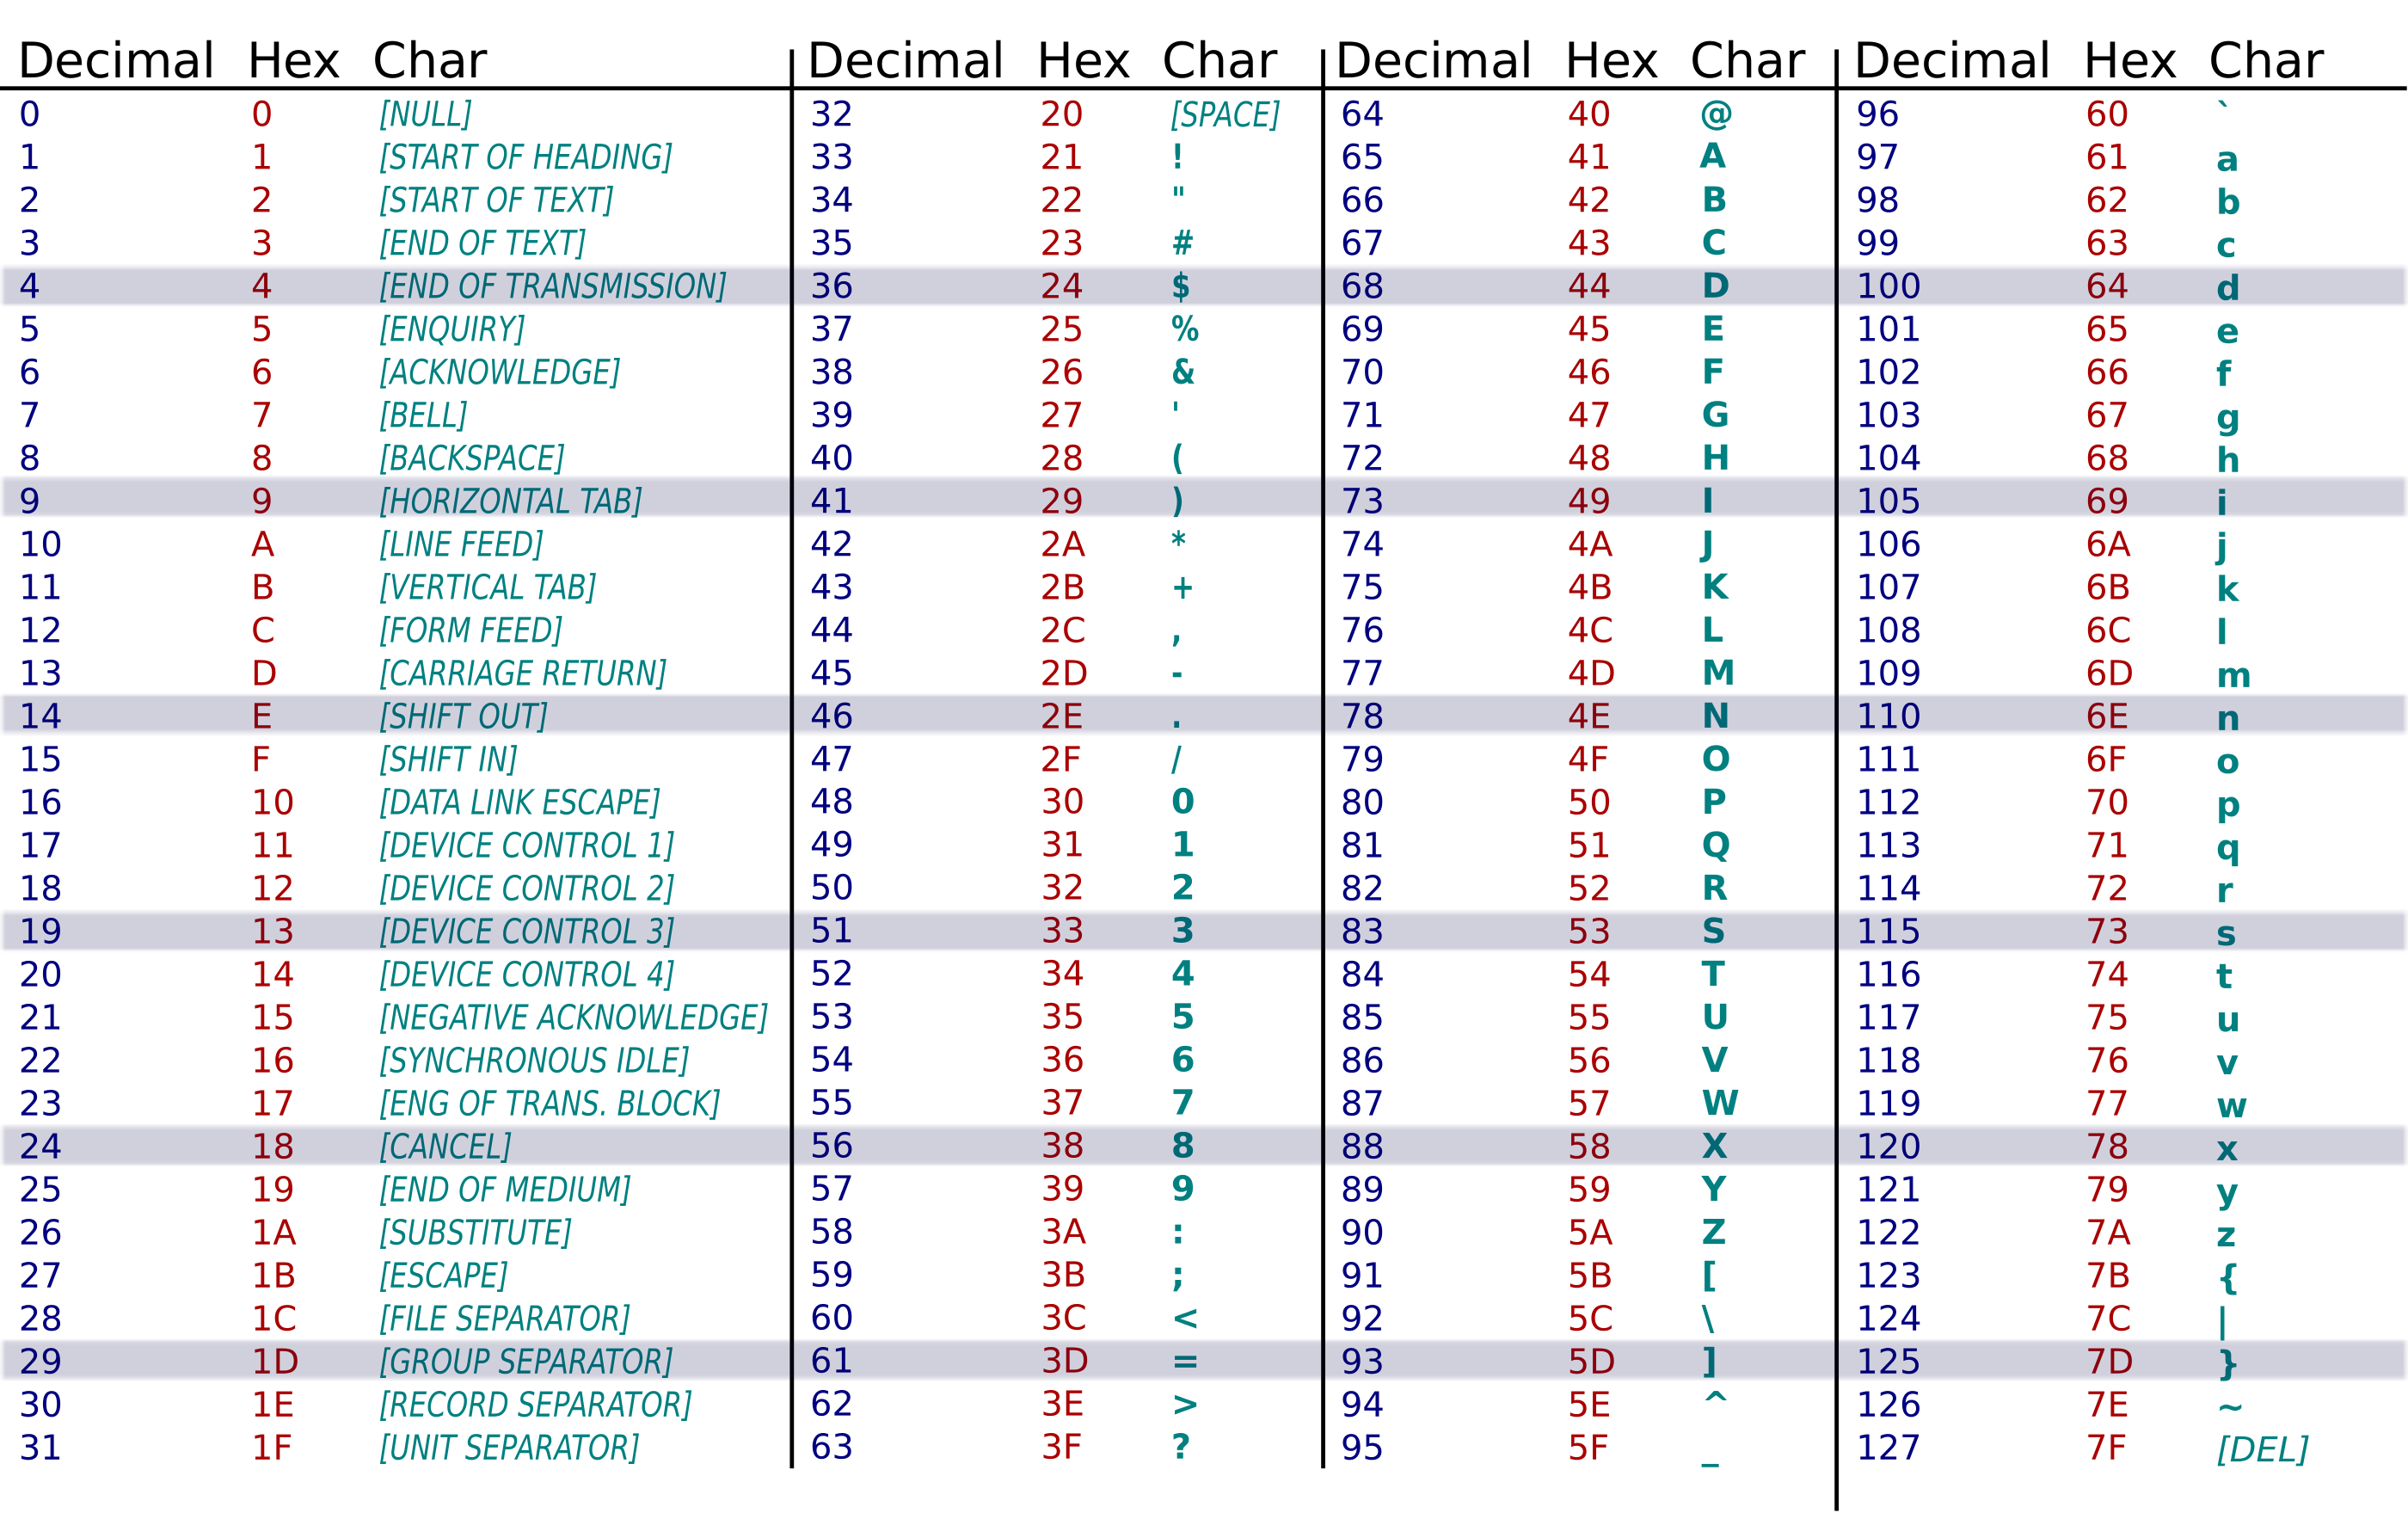 Codice ASCII Decimal Hex Char Decimal Hex Char